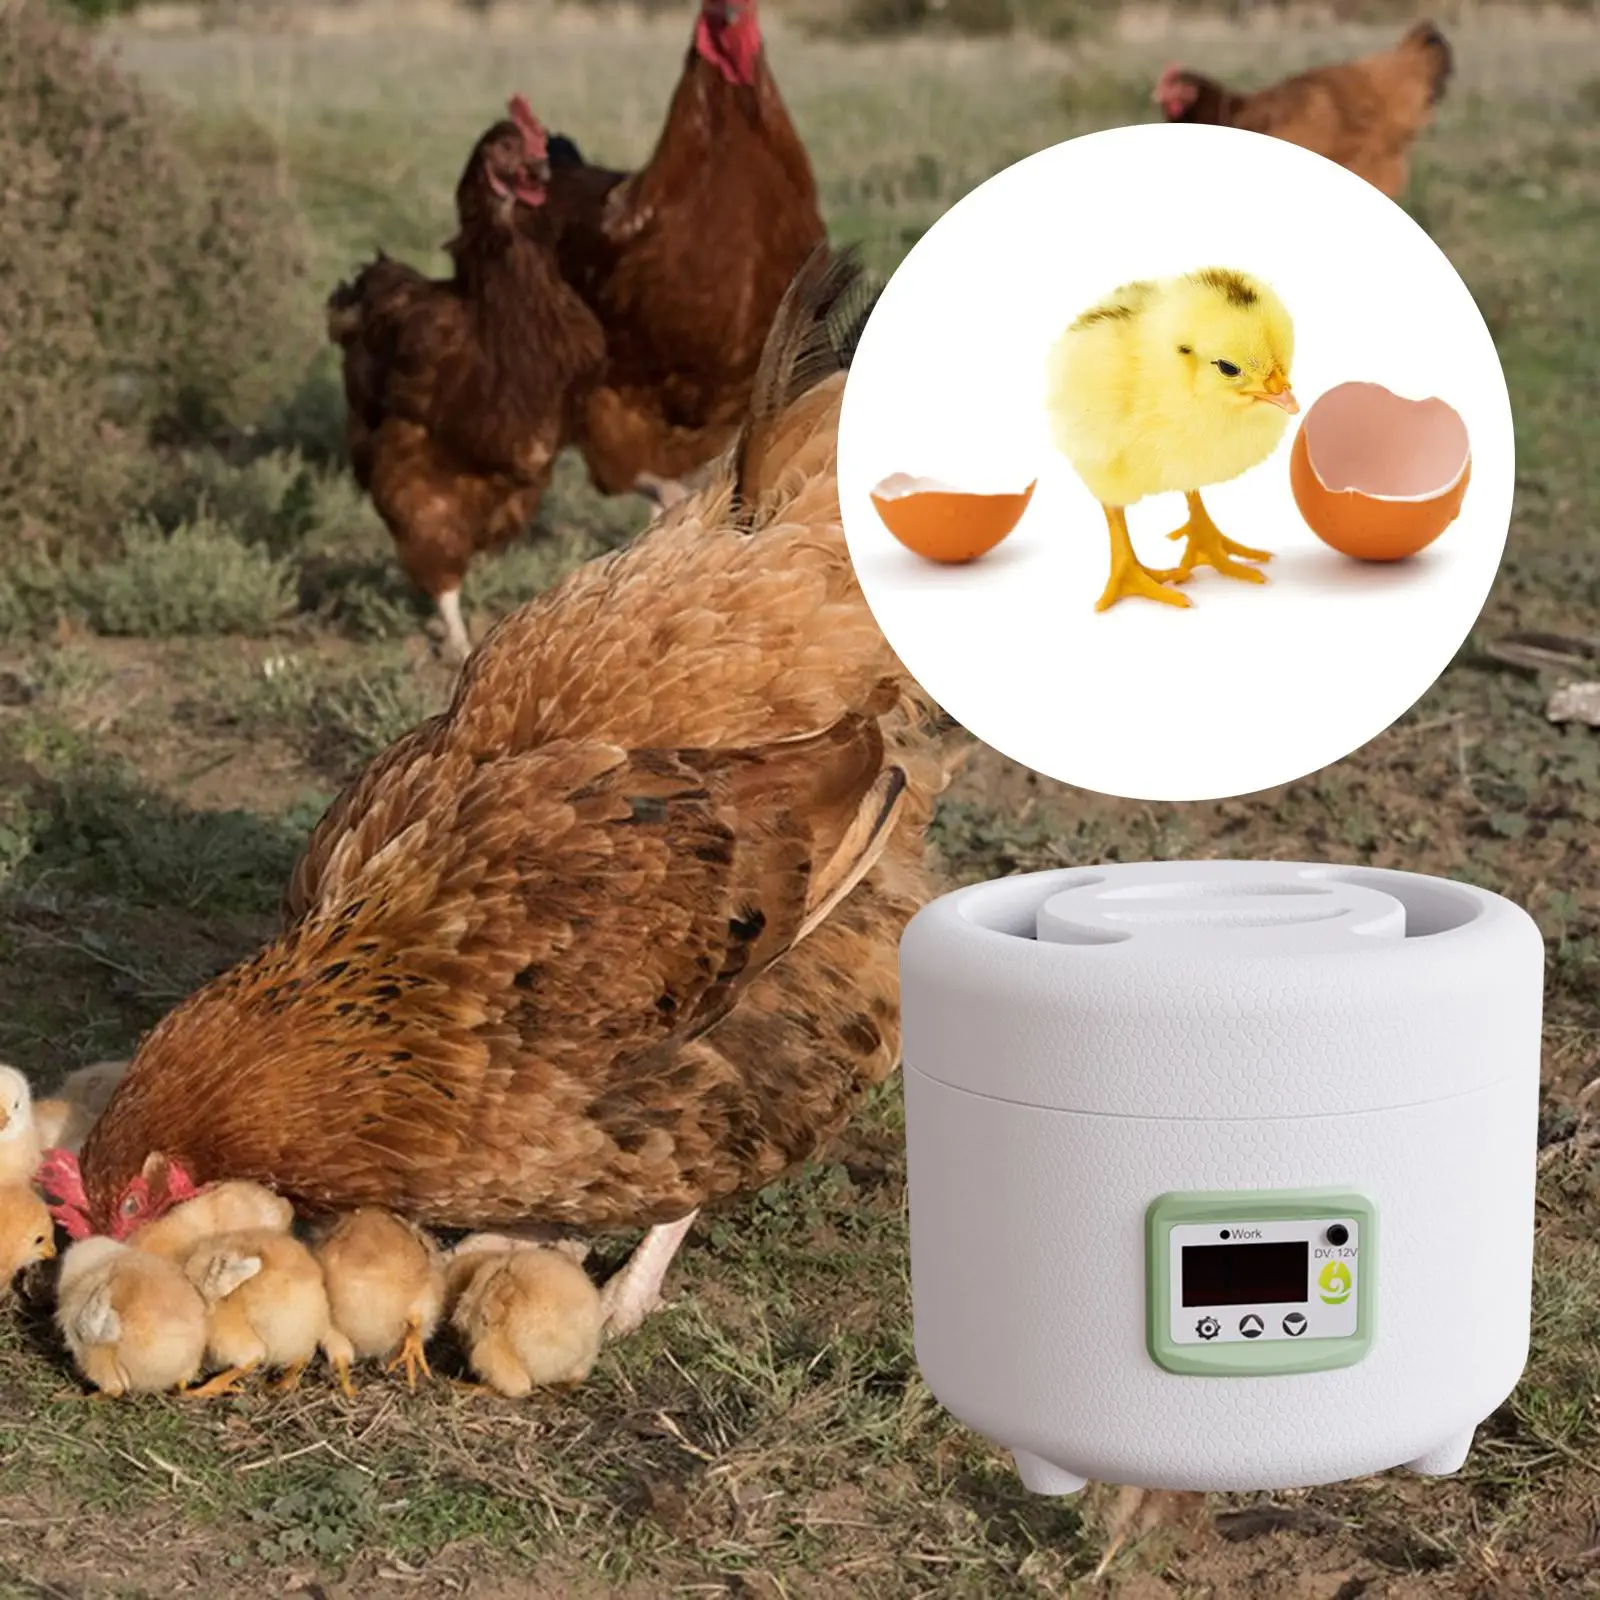 Chicken Bird Farm Hatchery Adjustable Digital Temperature 9 Egg Poultry Incubator Mini Egg Incubator Brooder